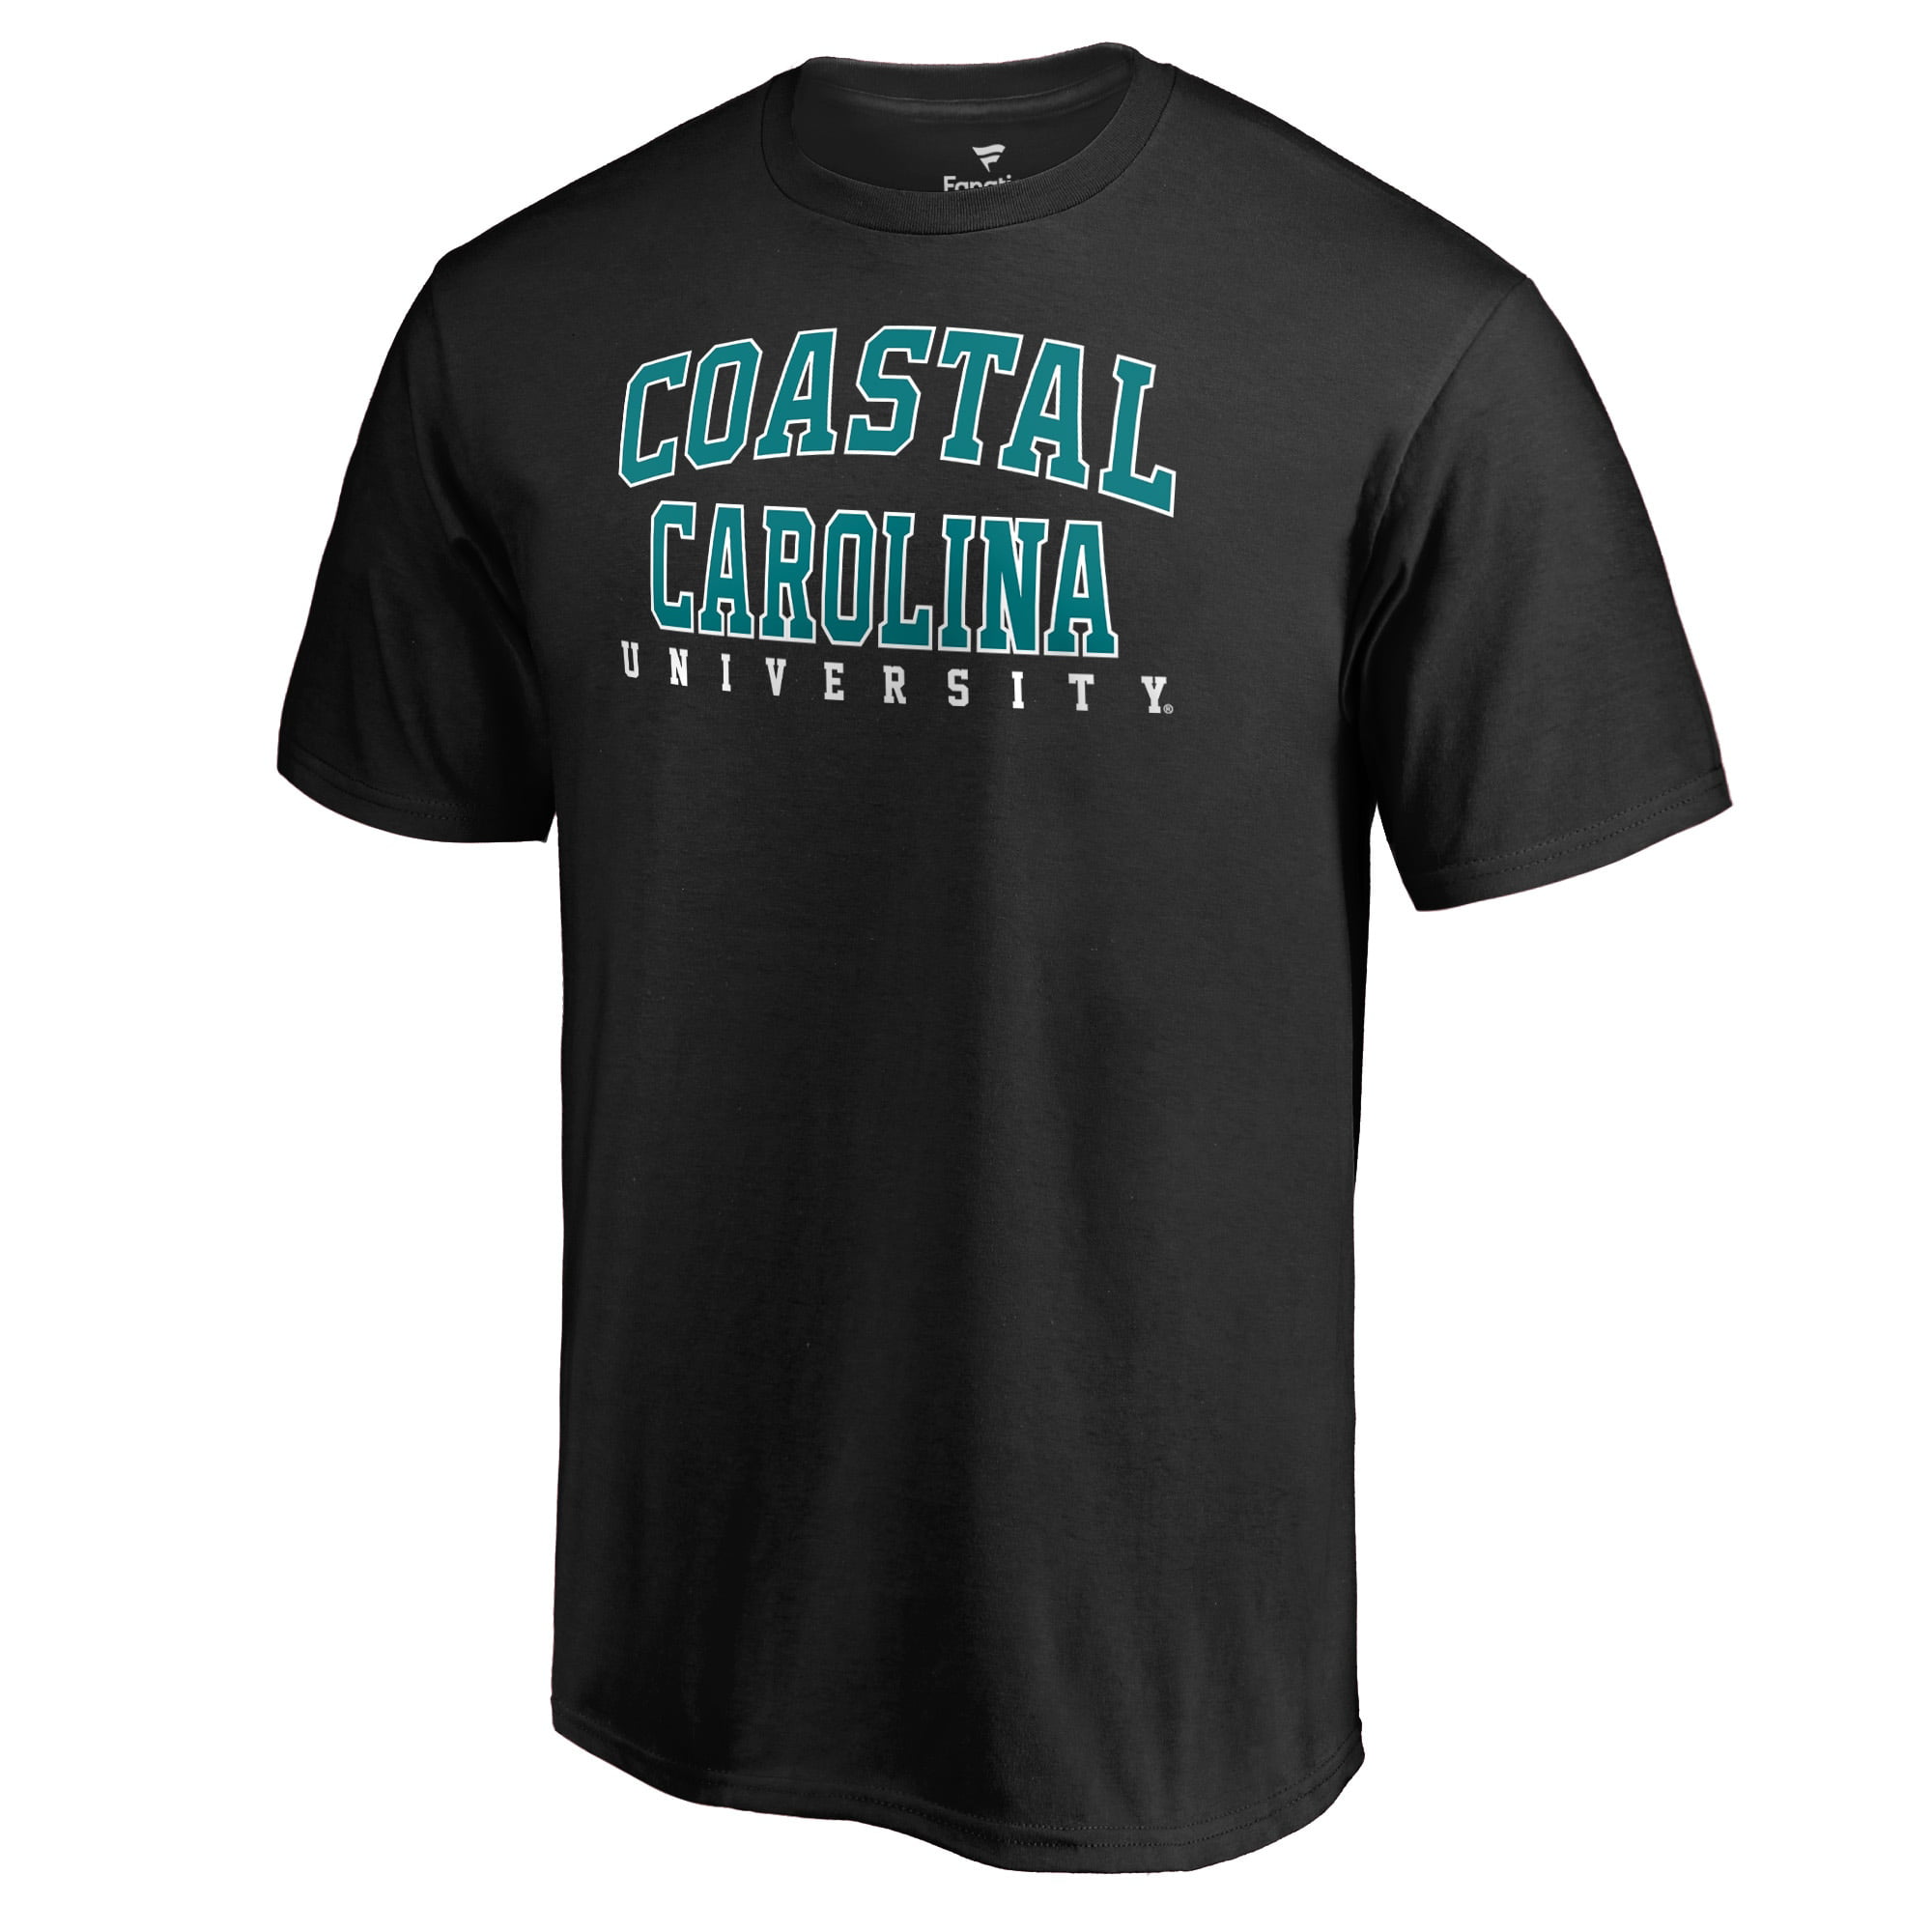 coastal carolina baseball shirt